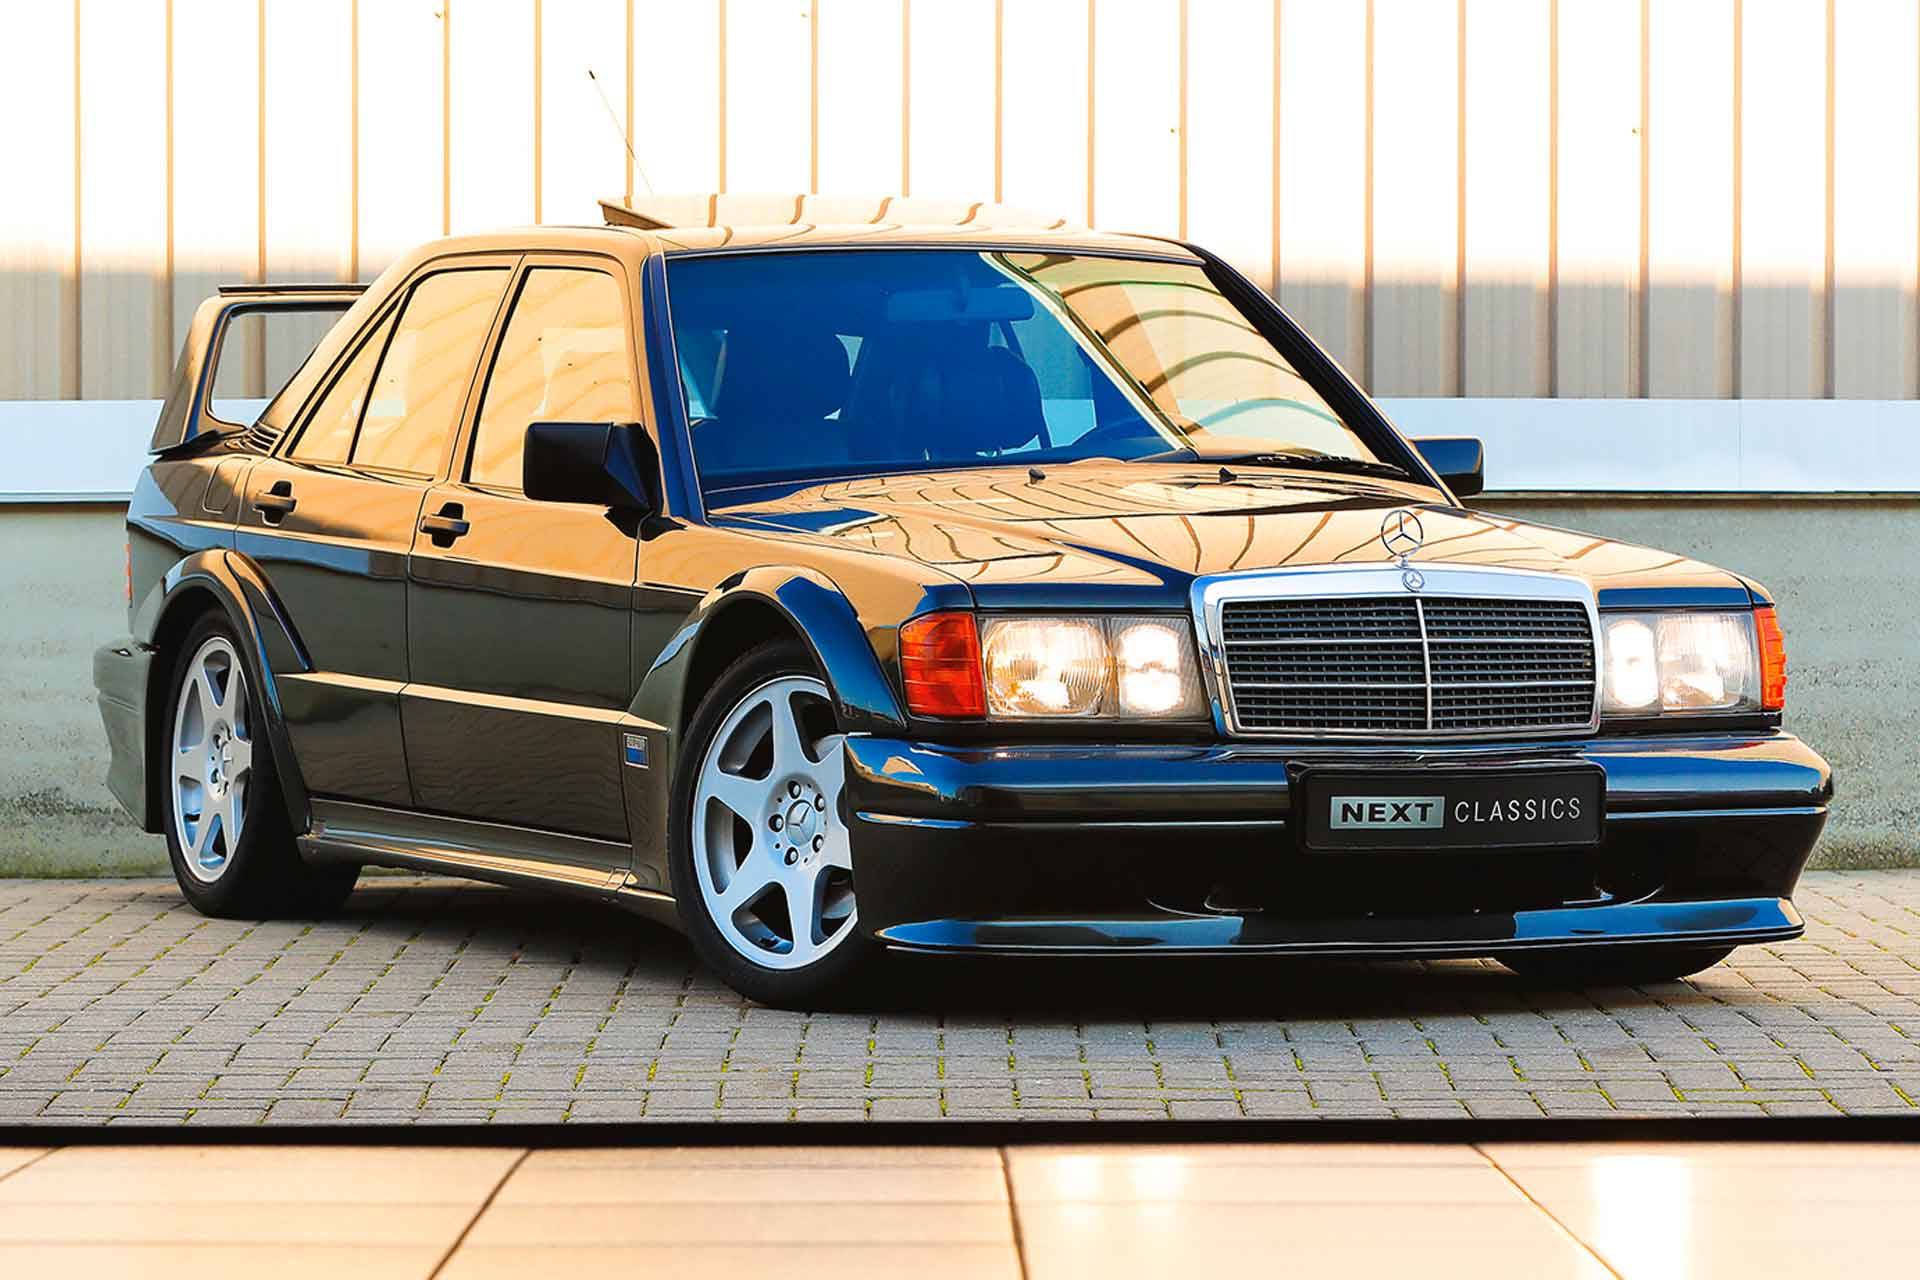 1990 Mercedes-Benz 190E 2.5-16 Evolution II седан